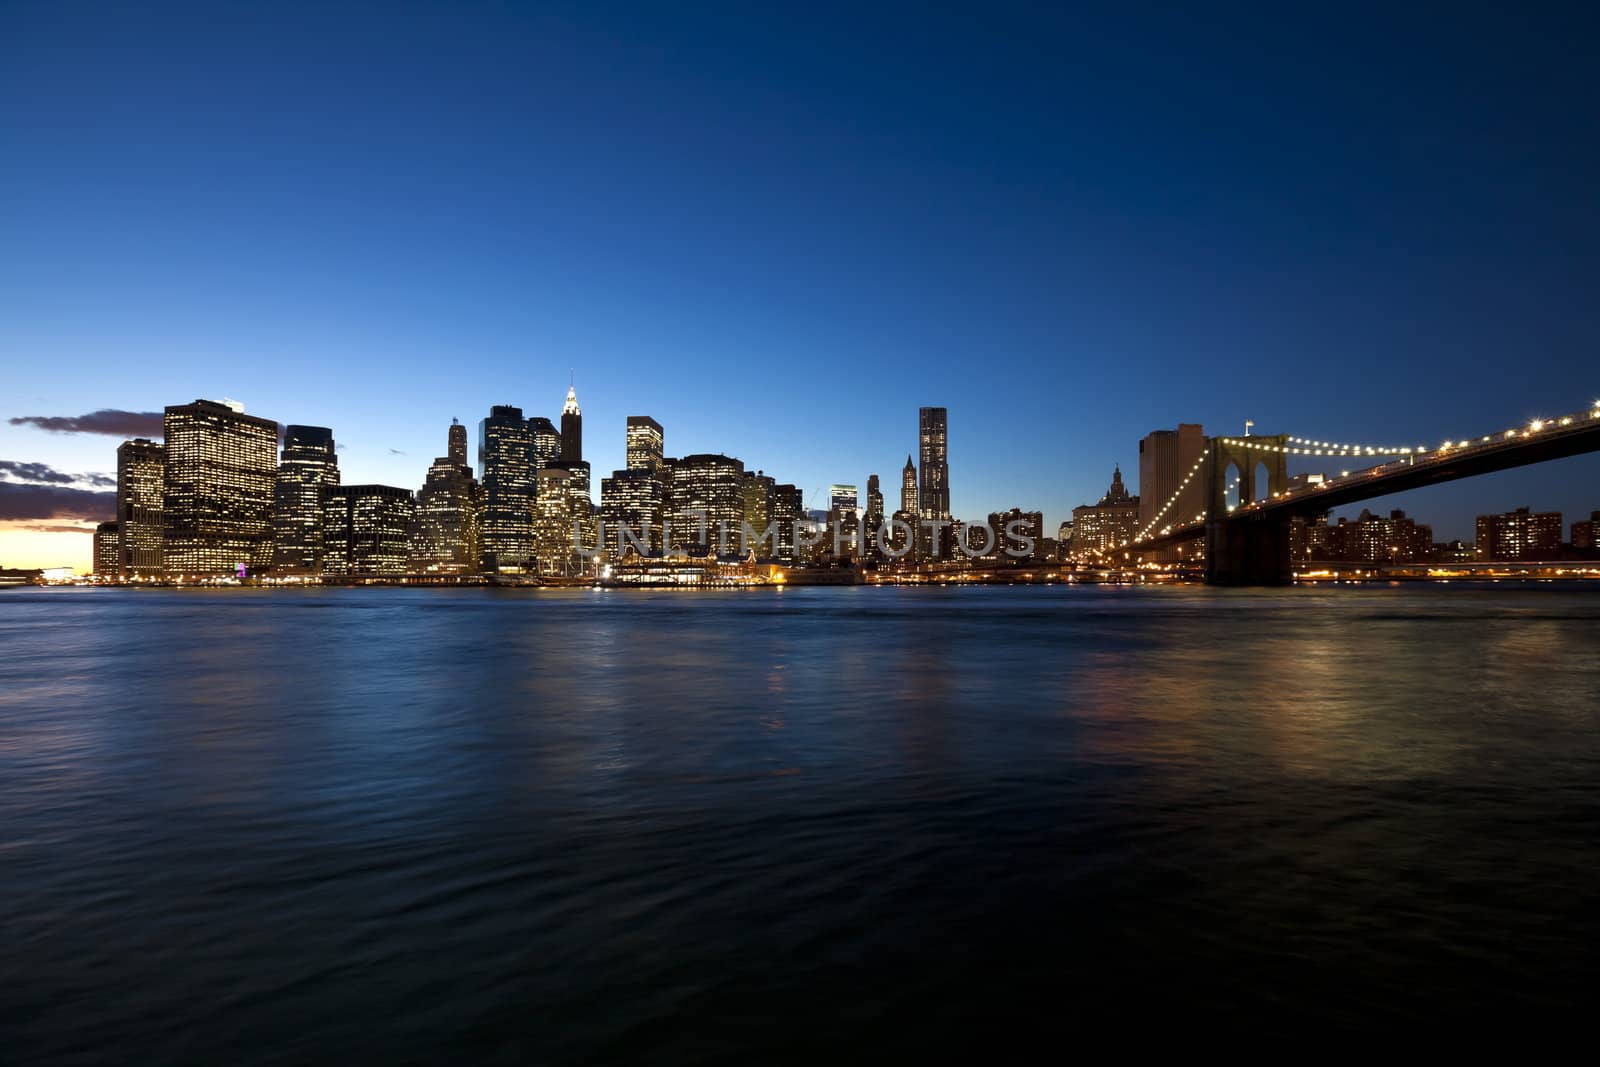 The New York City skyline at twilight w Brooklyn Bridge